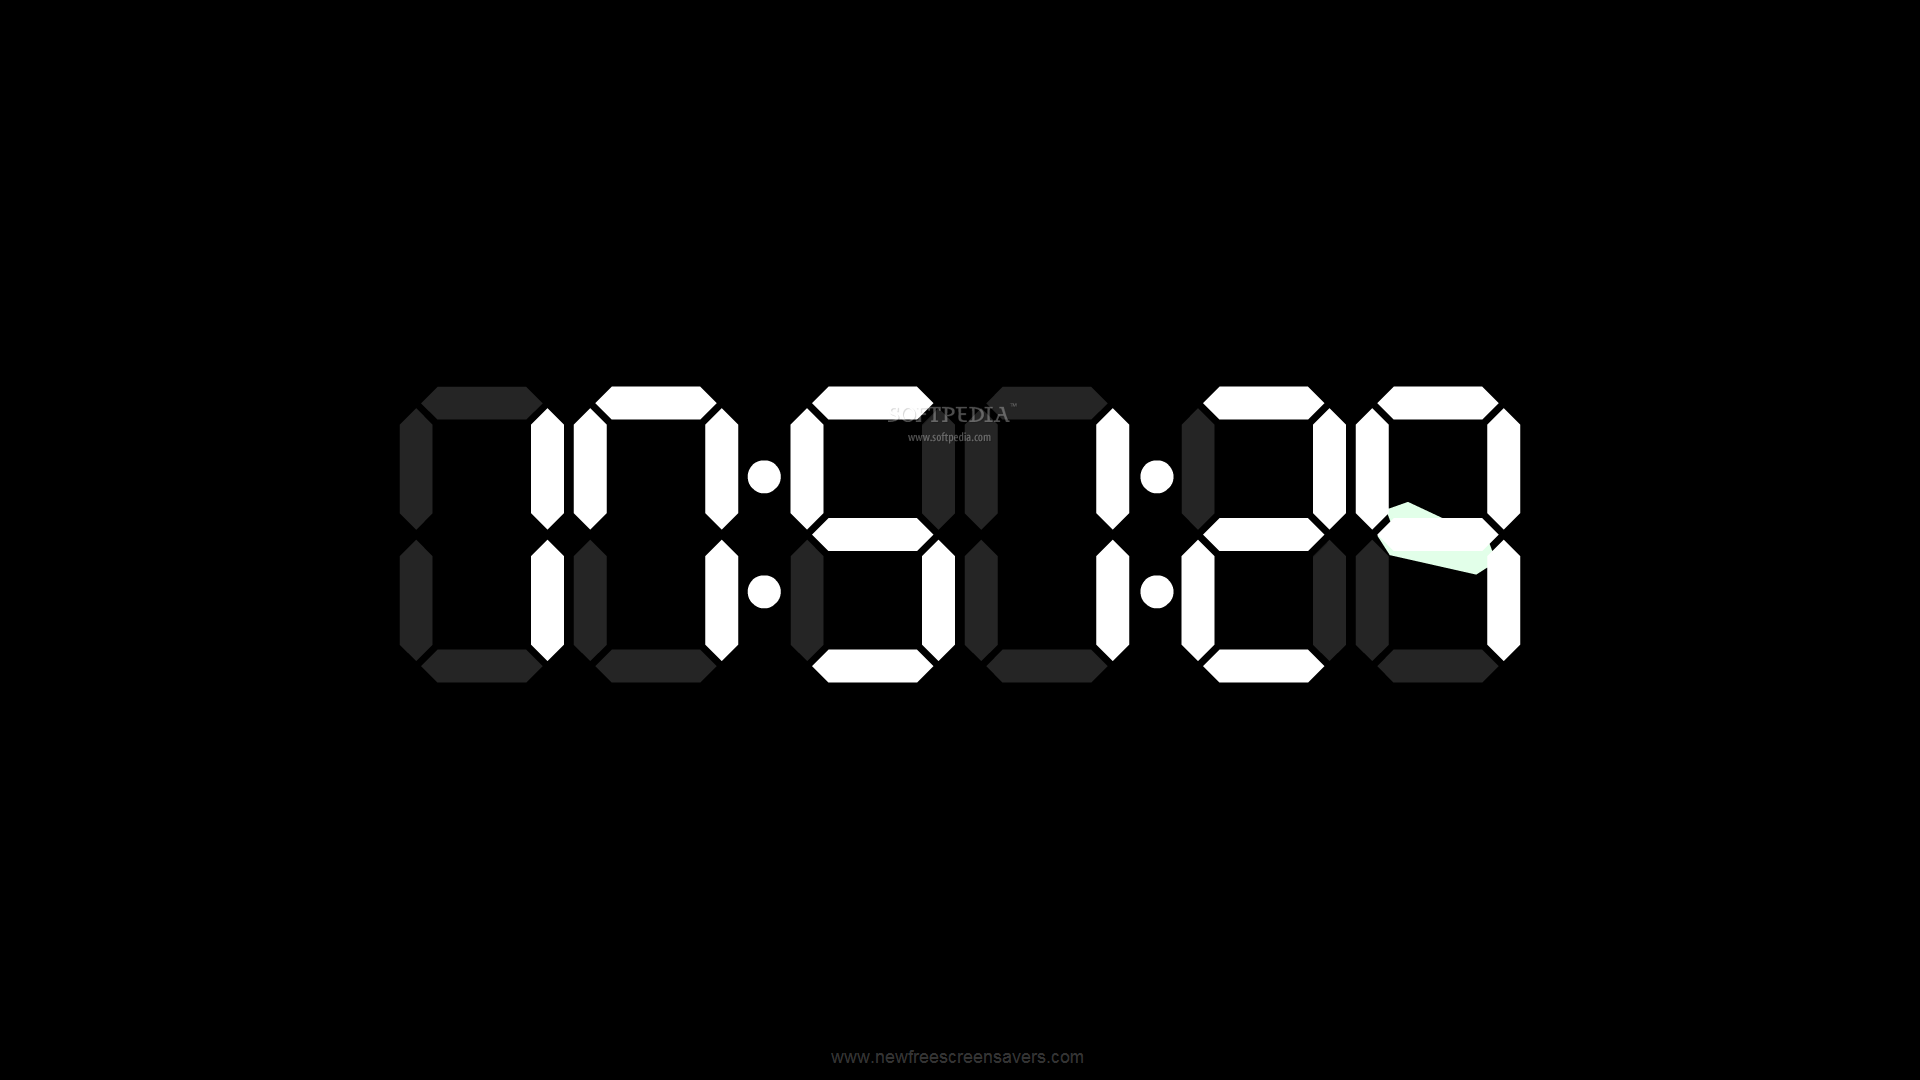 Время на рабочий стол. Часы Digital Clock 200730138828.4. Часы на черном фоне. Заставка часы на экран. Часы на темном фоне.